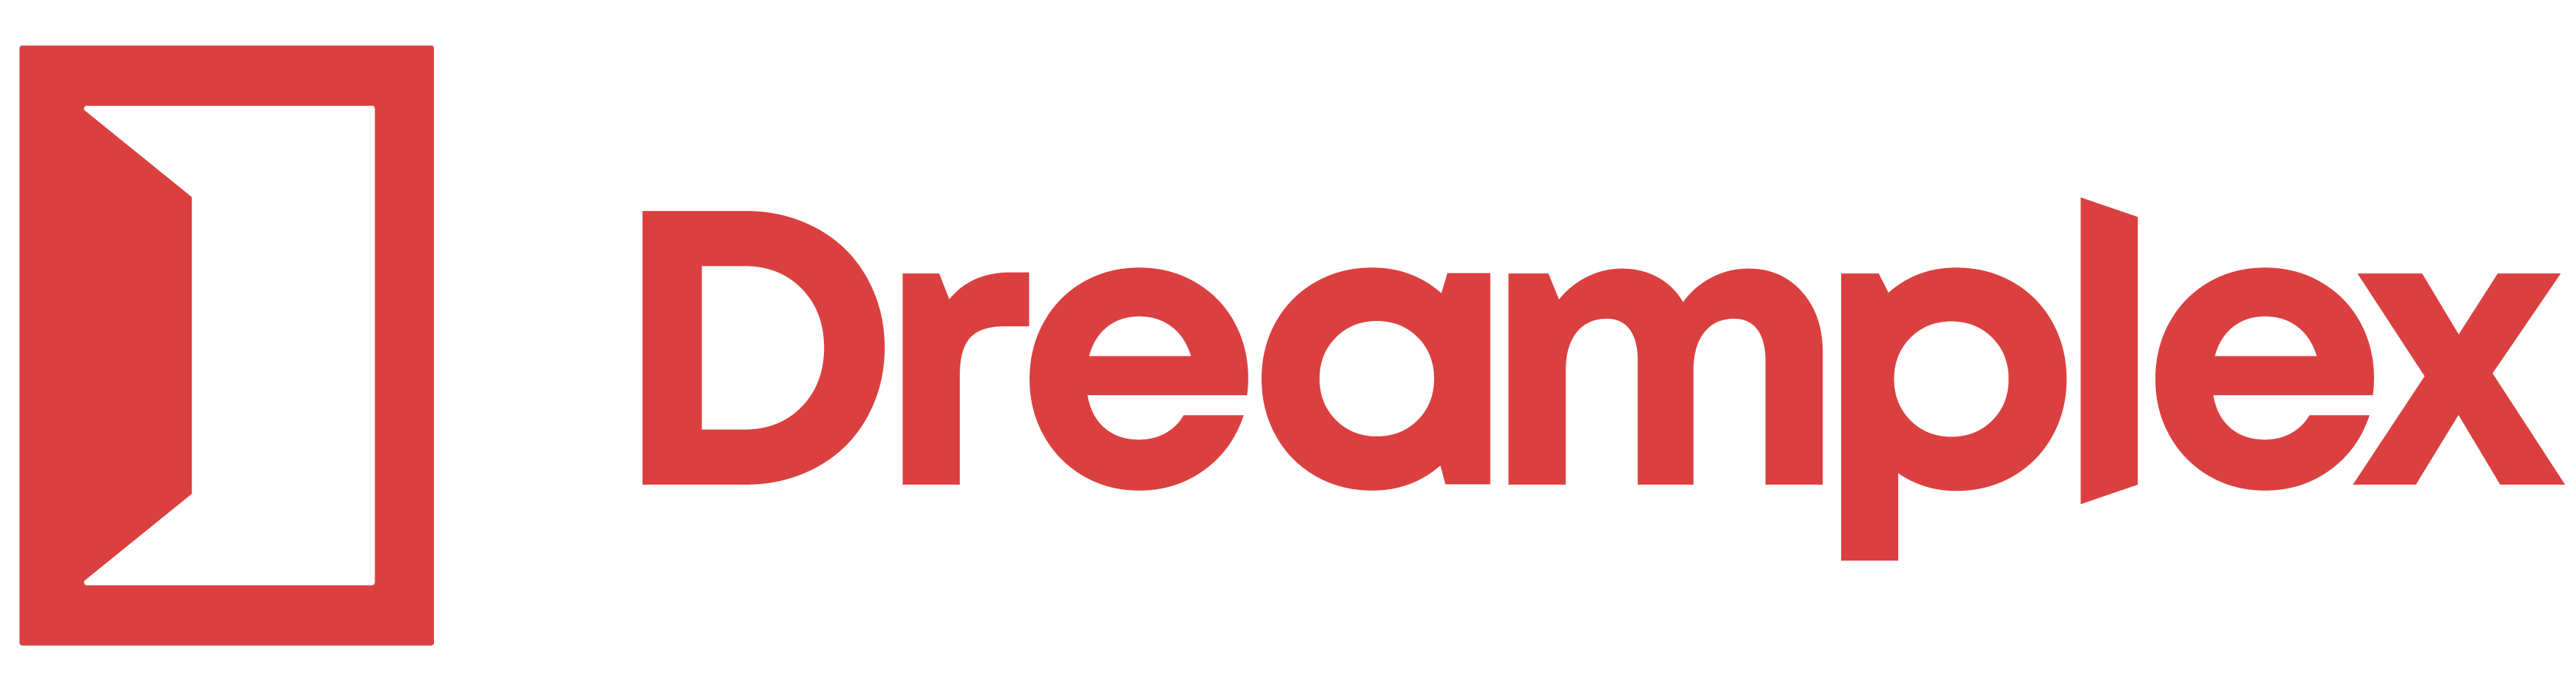 Dreamplex-new-logo-01